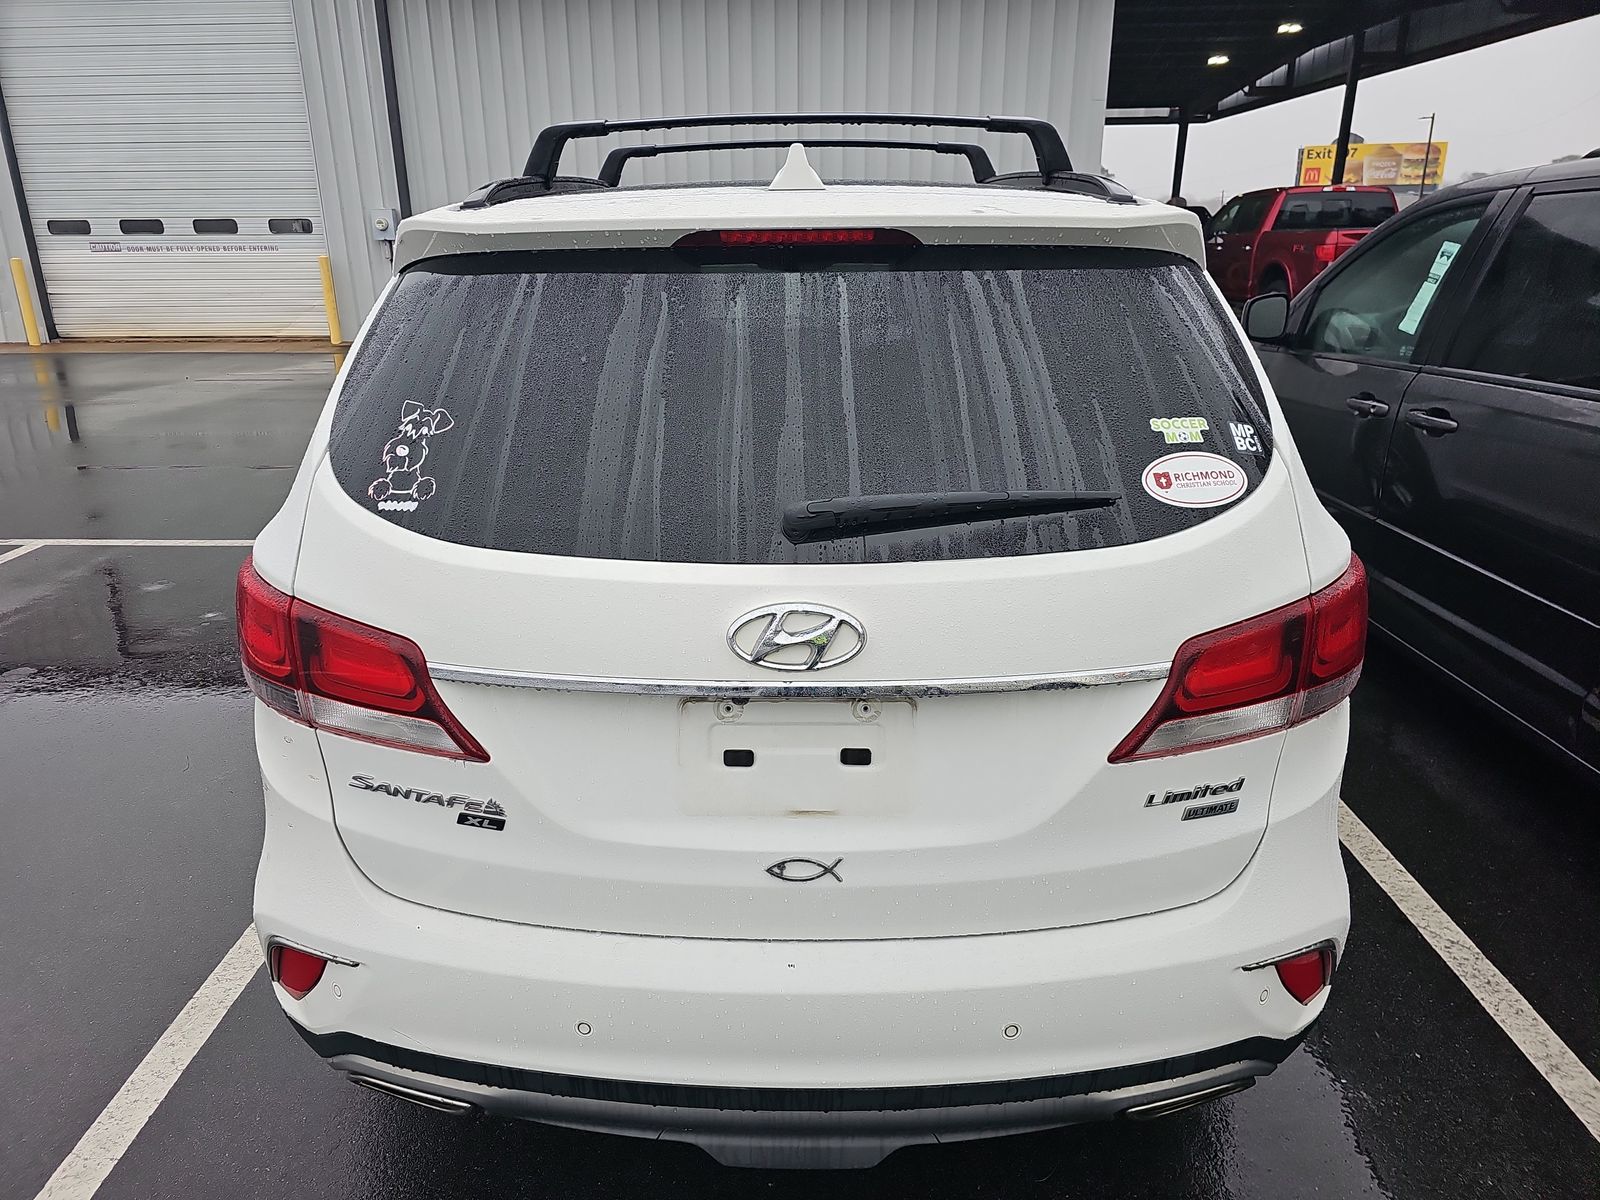 2019 Hyundai Santa Fe LTD ULT FWD